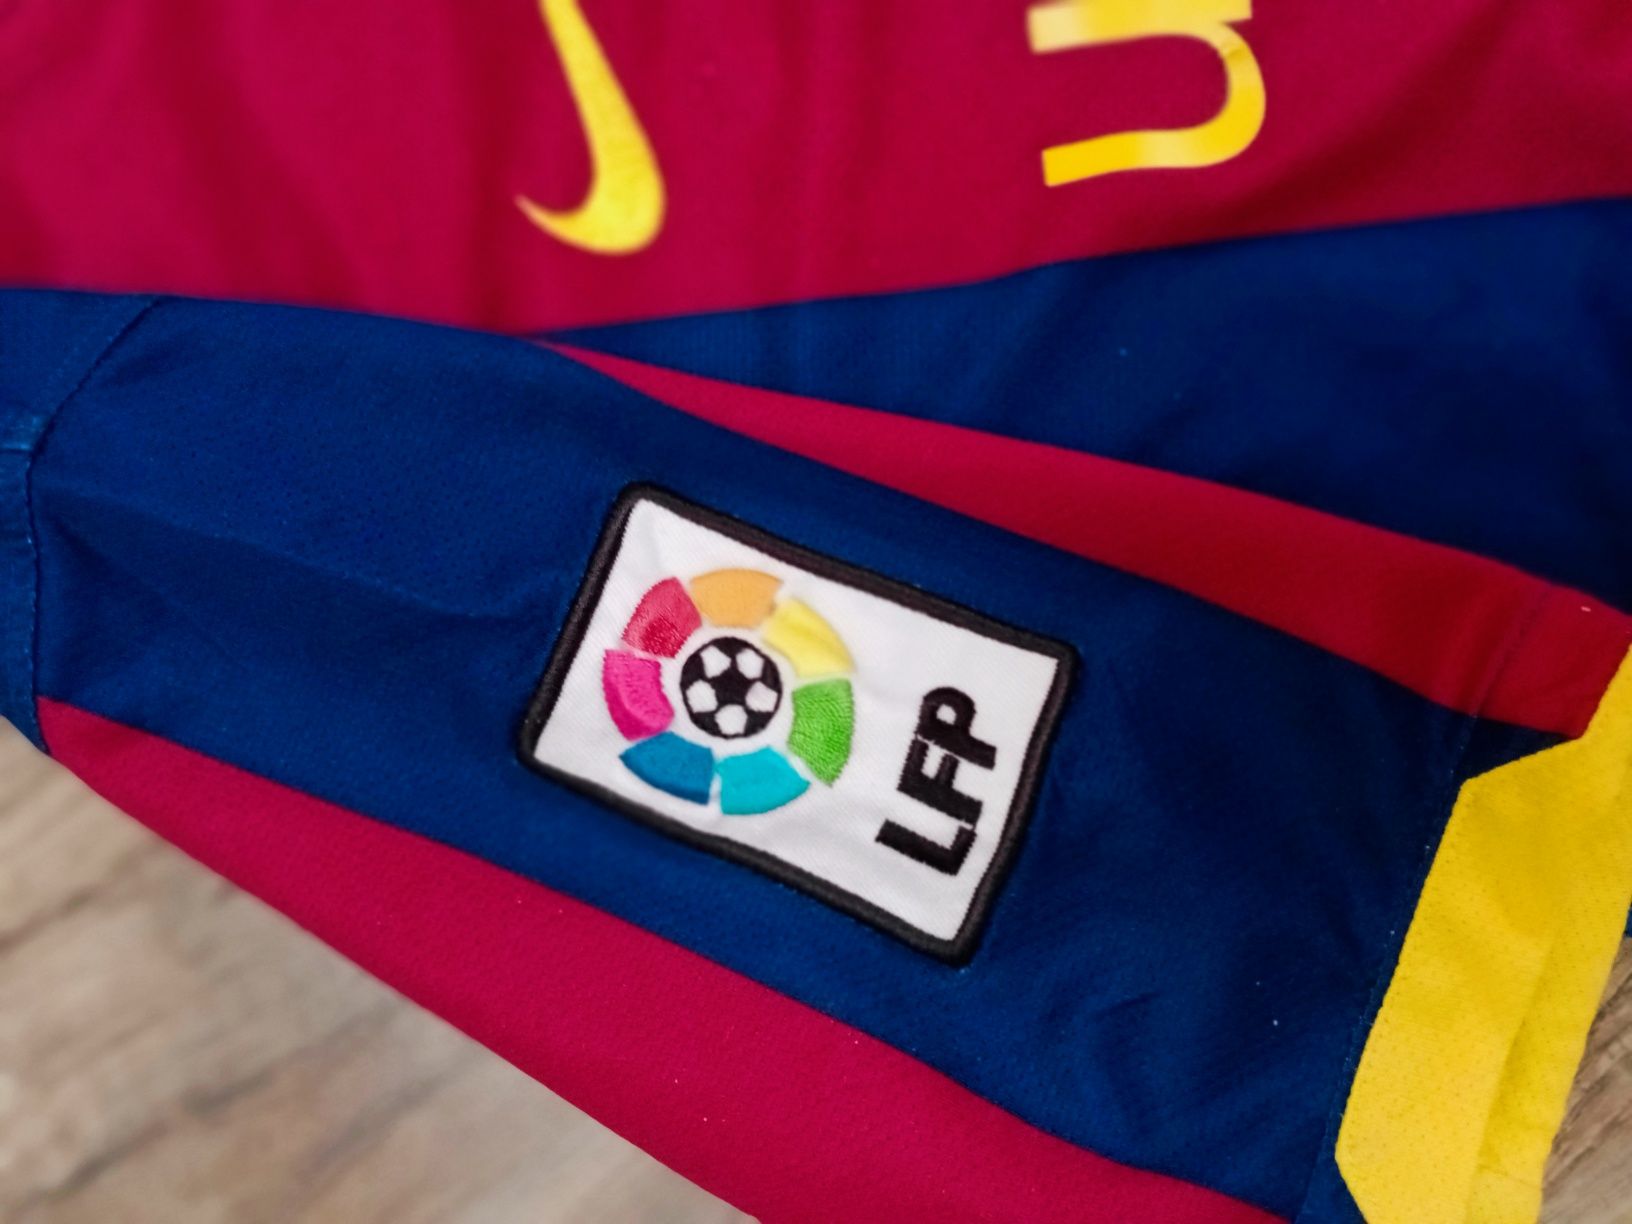 Domowa koszulka FC Barcelona Nike sezon 2010/11